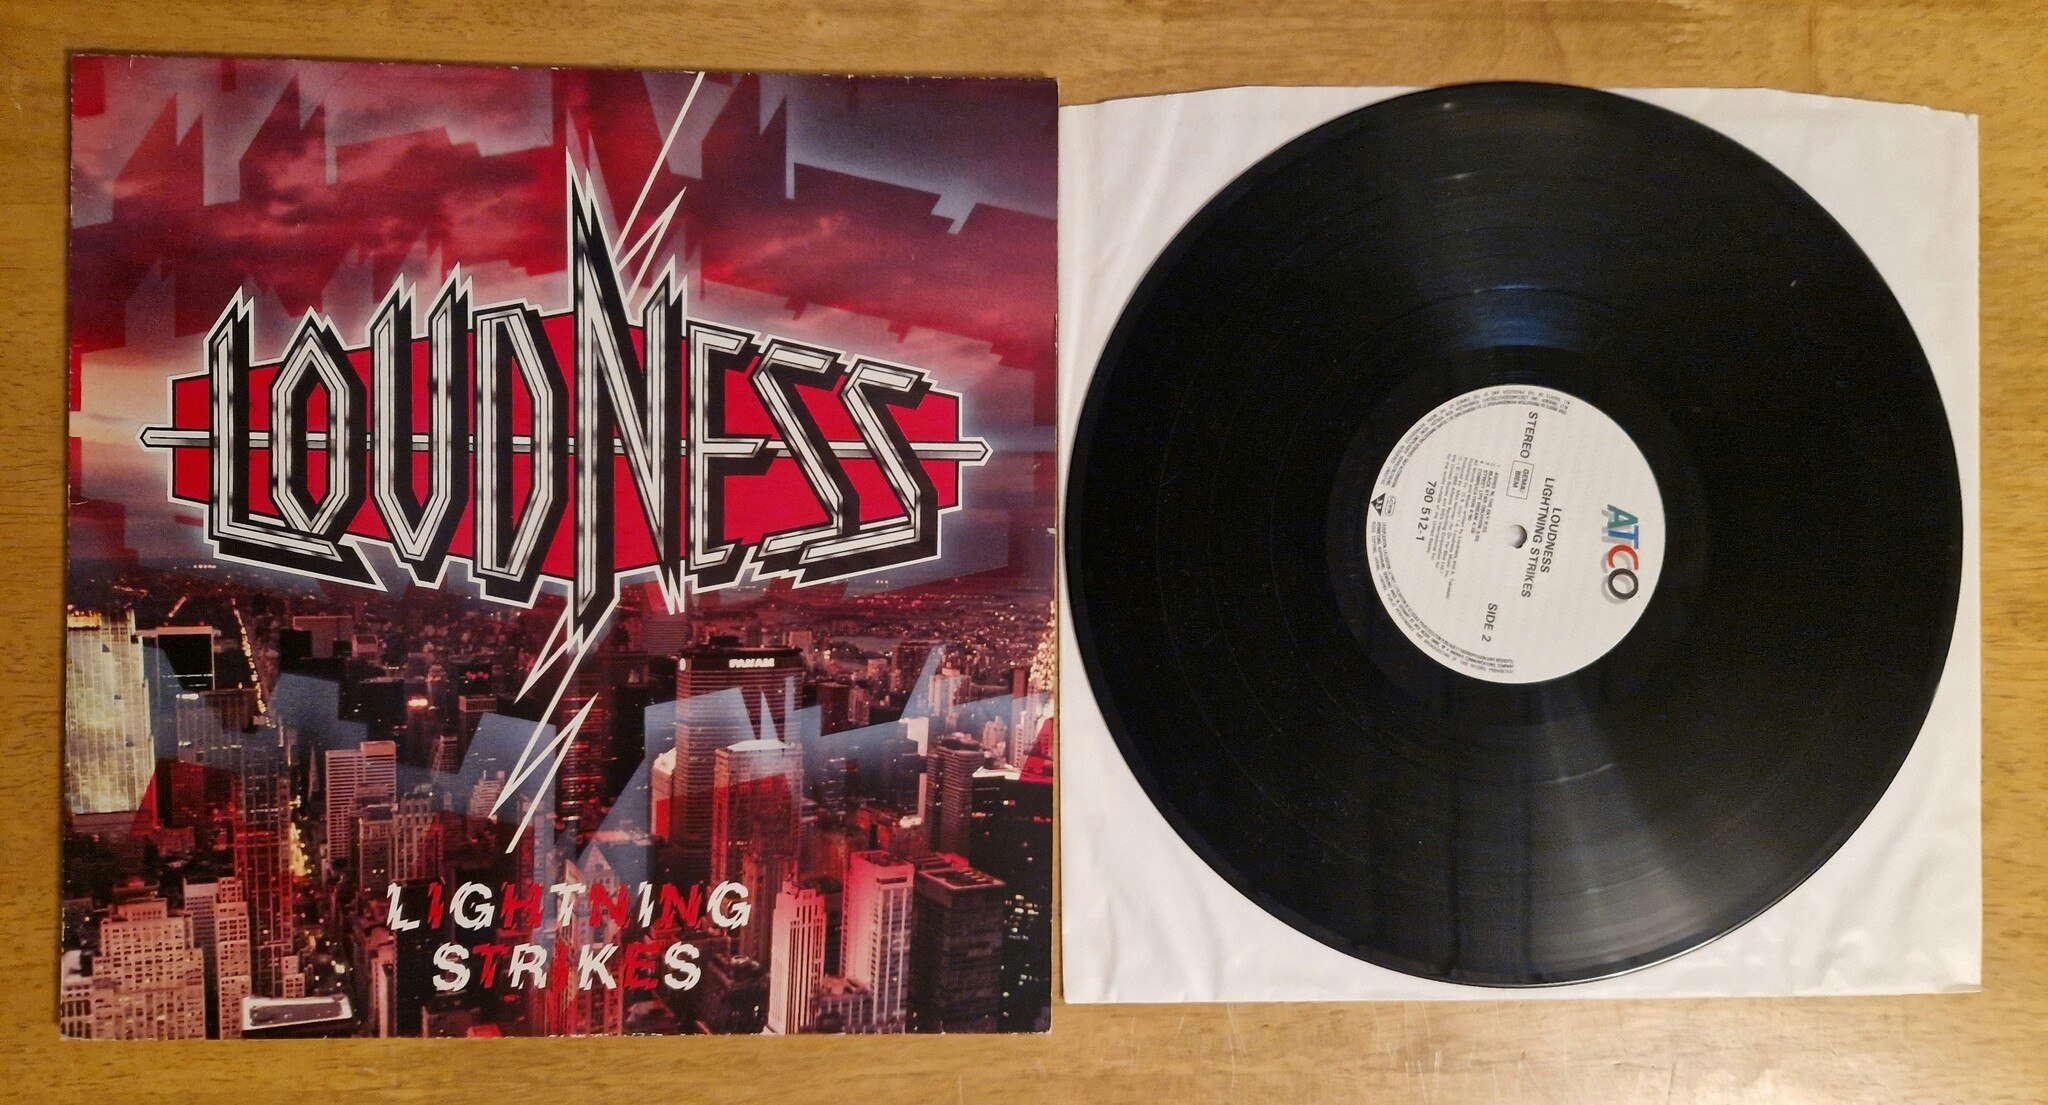 Loudness, Lightning strikes. Vinyl LP